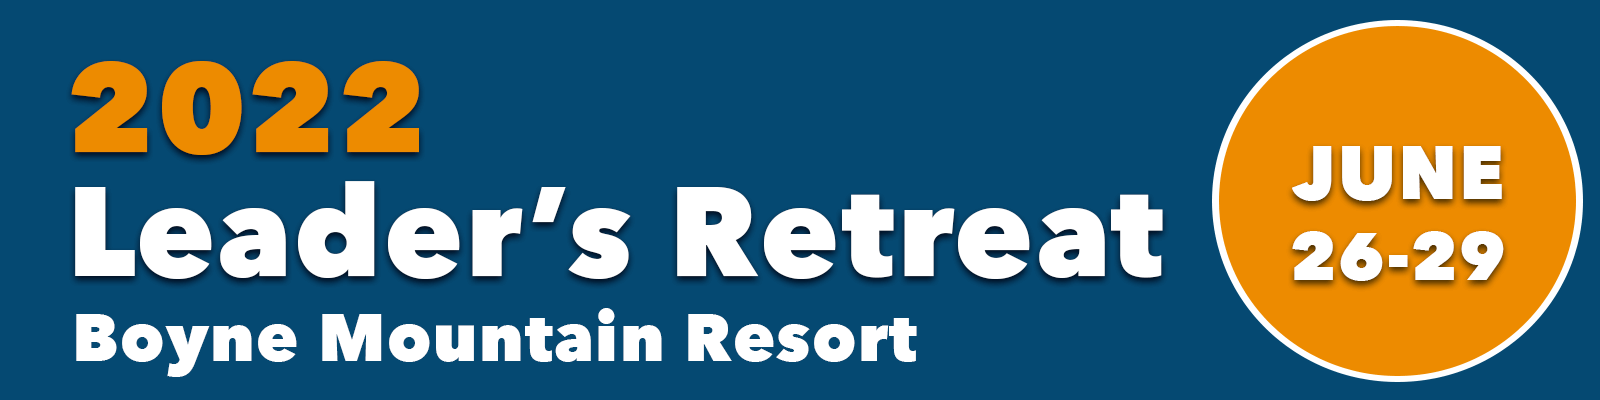 2022 Leader's Retreat - Boyne Mountain Resort - June 26-29